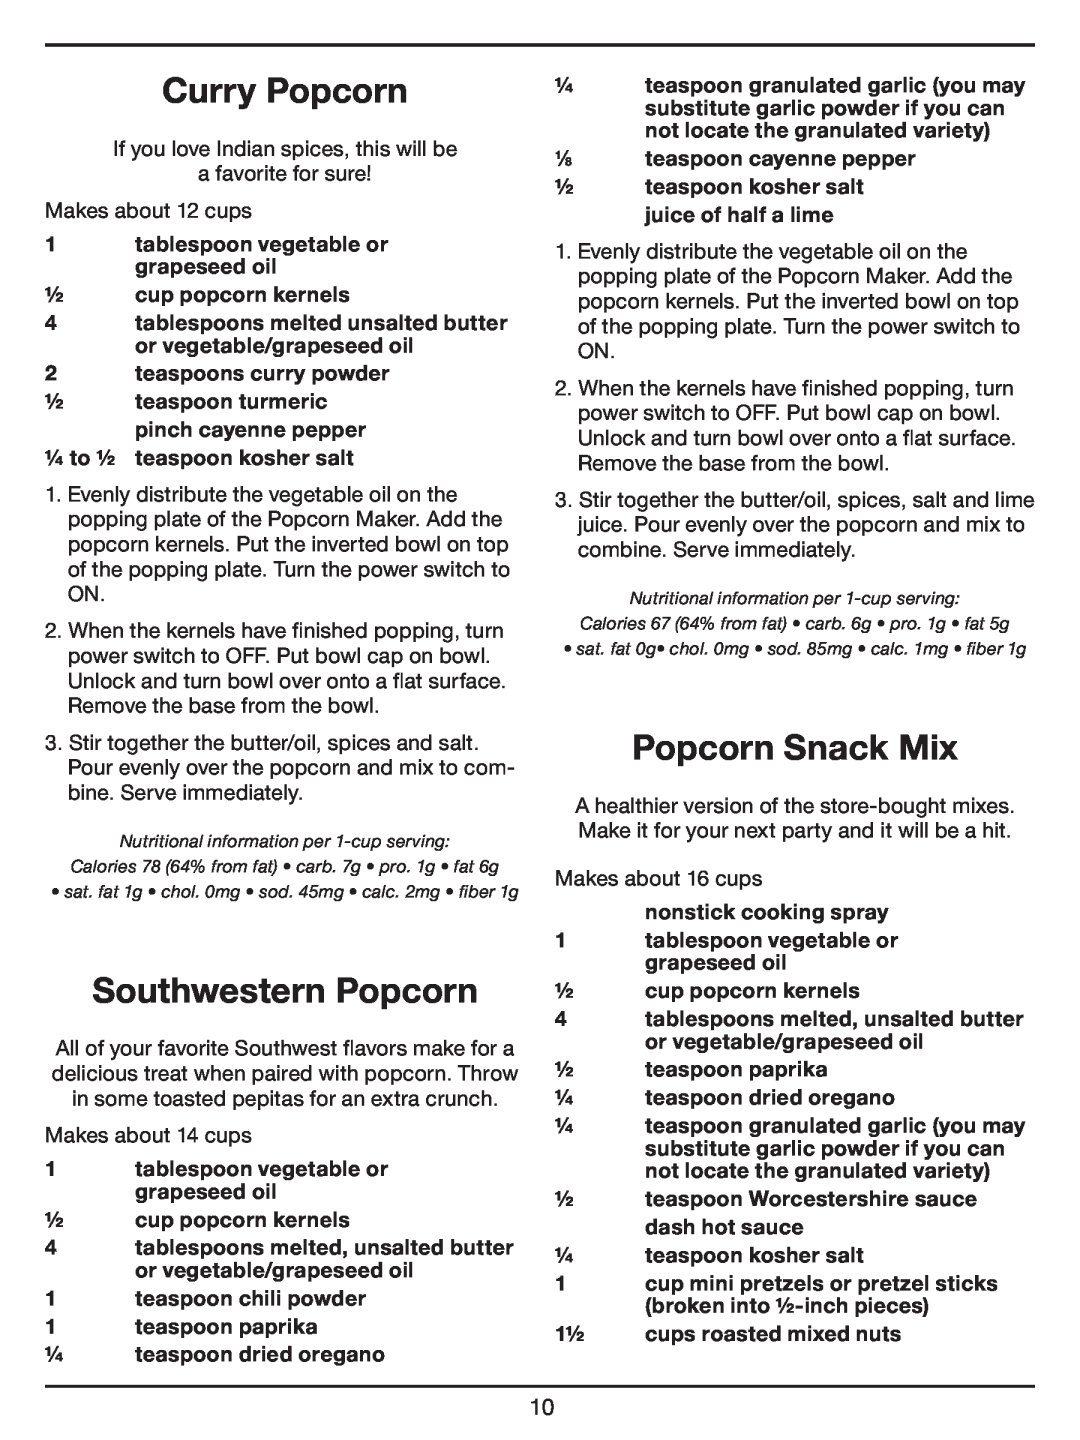 Cuisinart CPM-700 Series manual Curry Popcorn, Southwestern Popcorn, Popcorn Snack Mix 